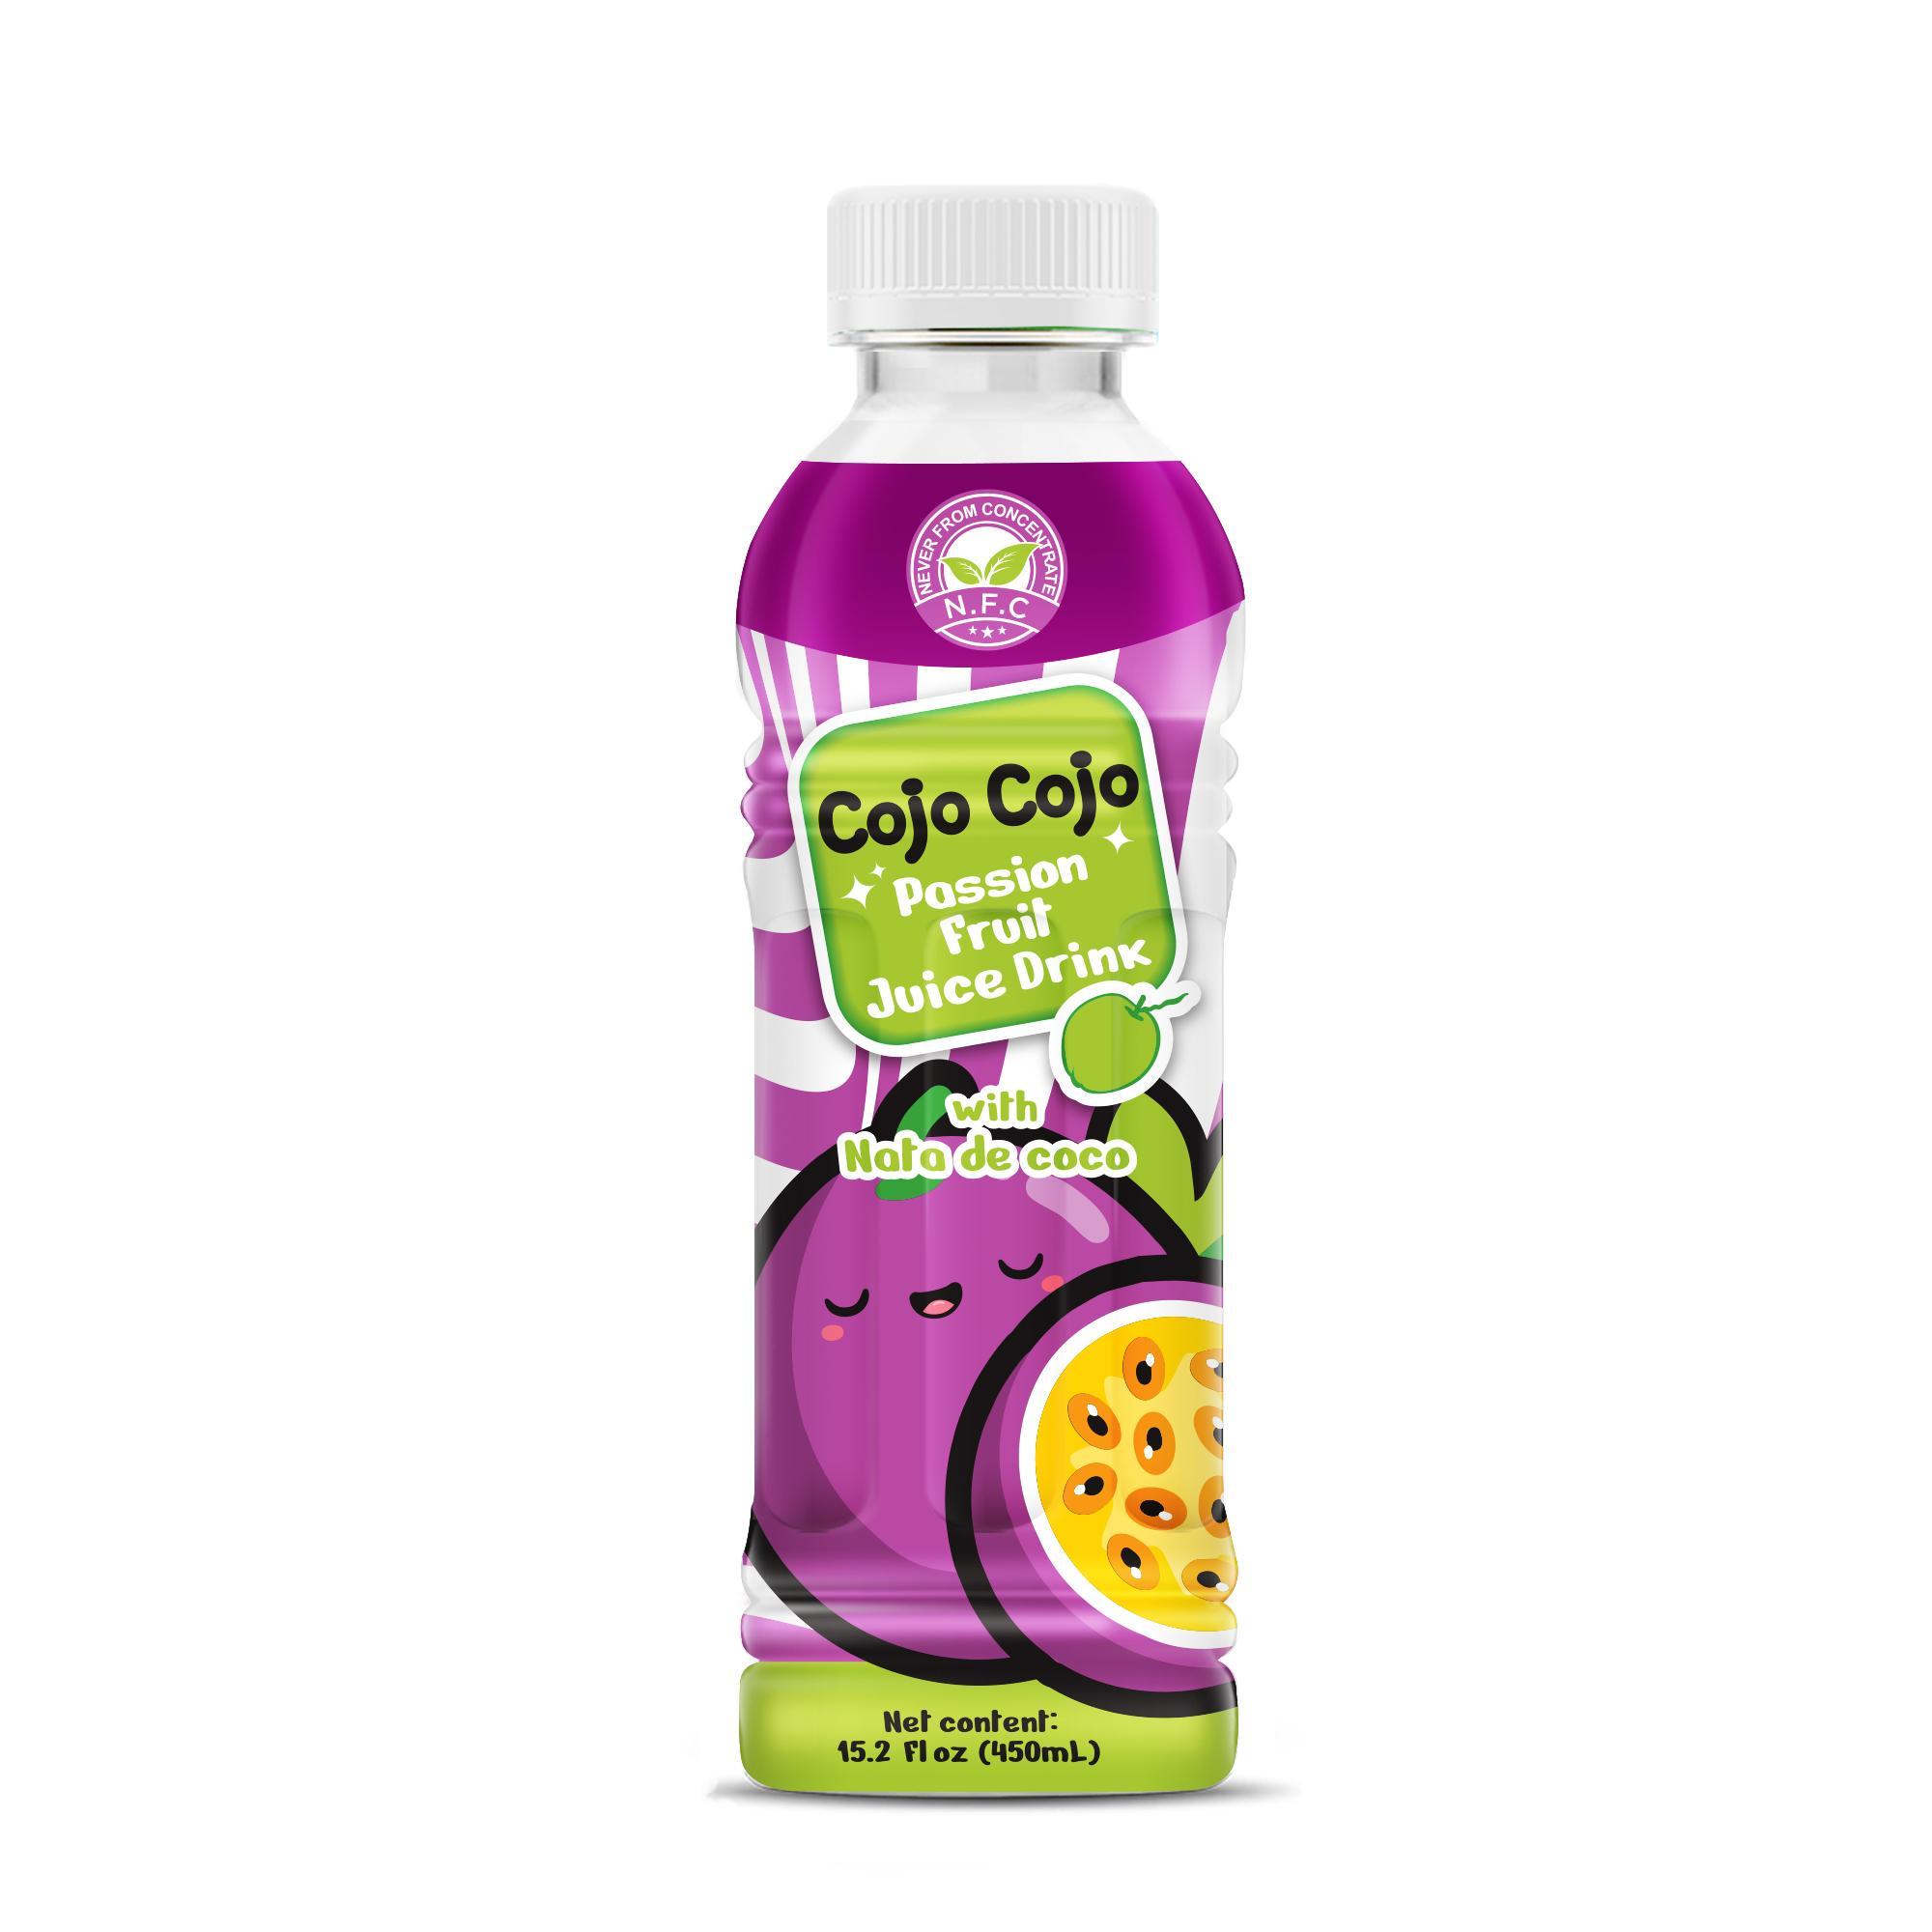 https://vinut.com.vn/wp-content/uploads/2023/04/15.2-fl-oz-Cojo-Cojo-Passion-fruit-juice-drink-with-Nata-de-coco.jpg